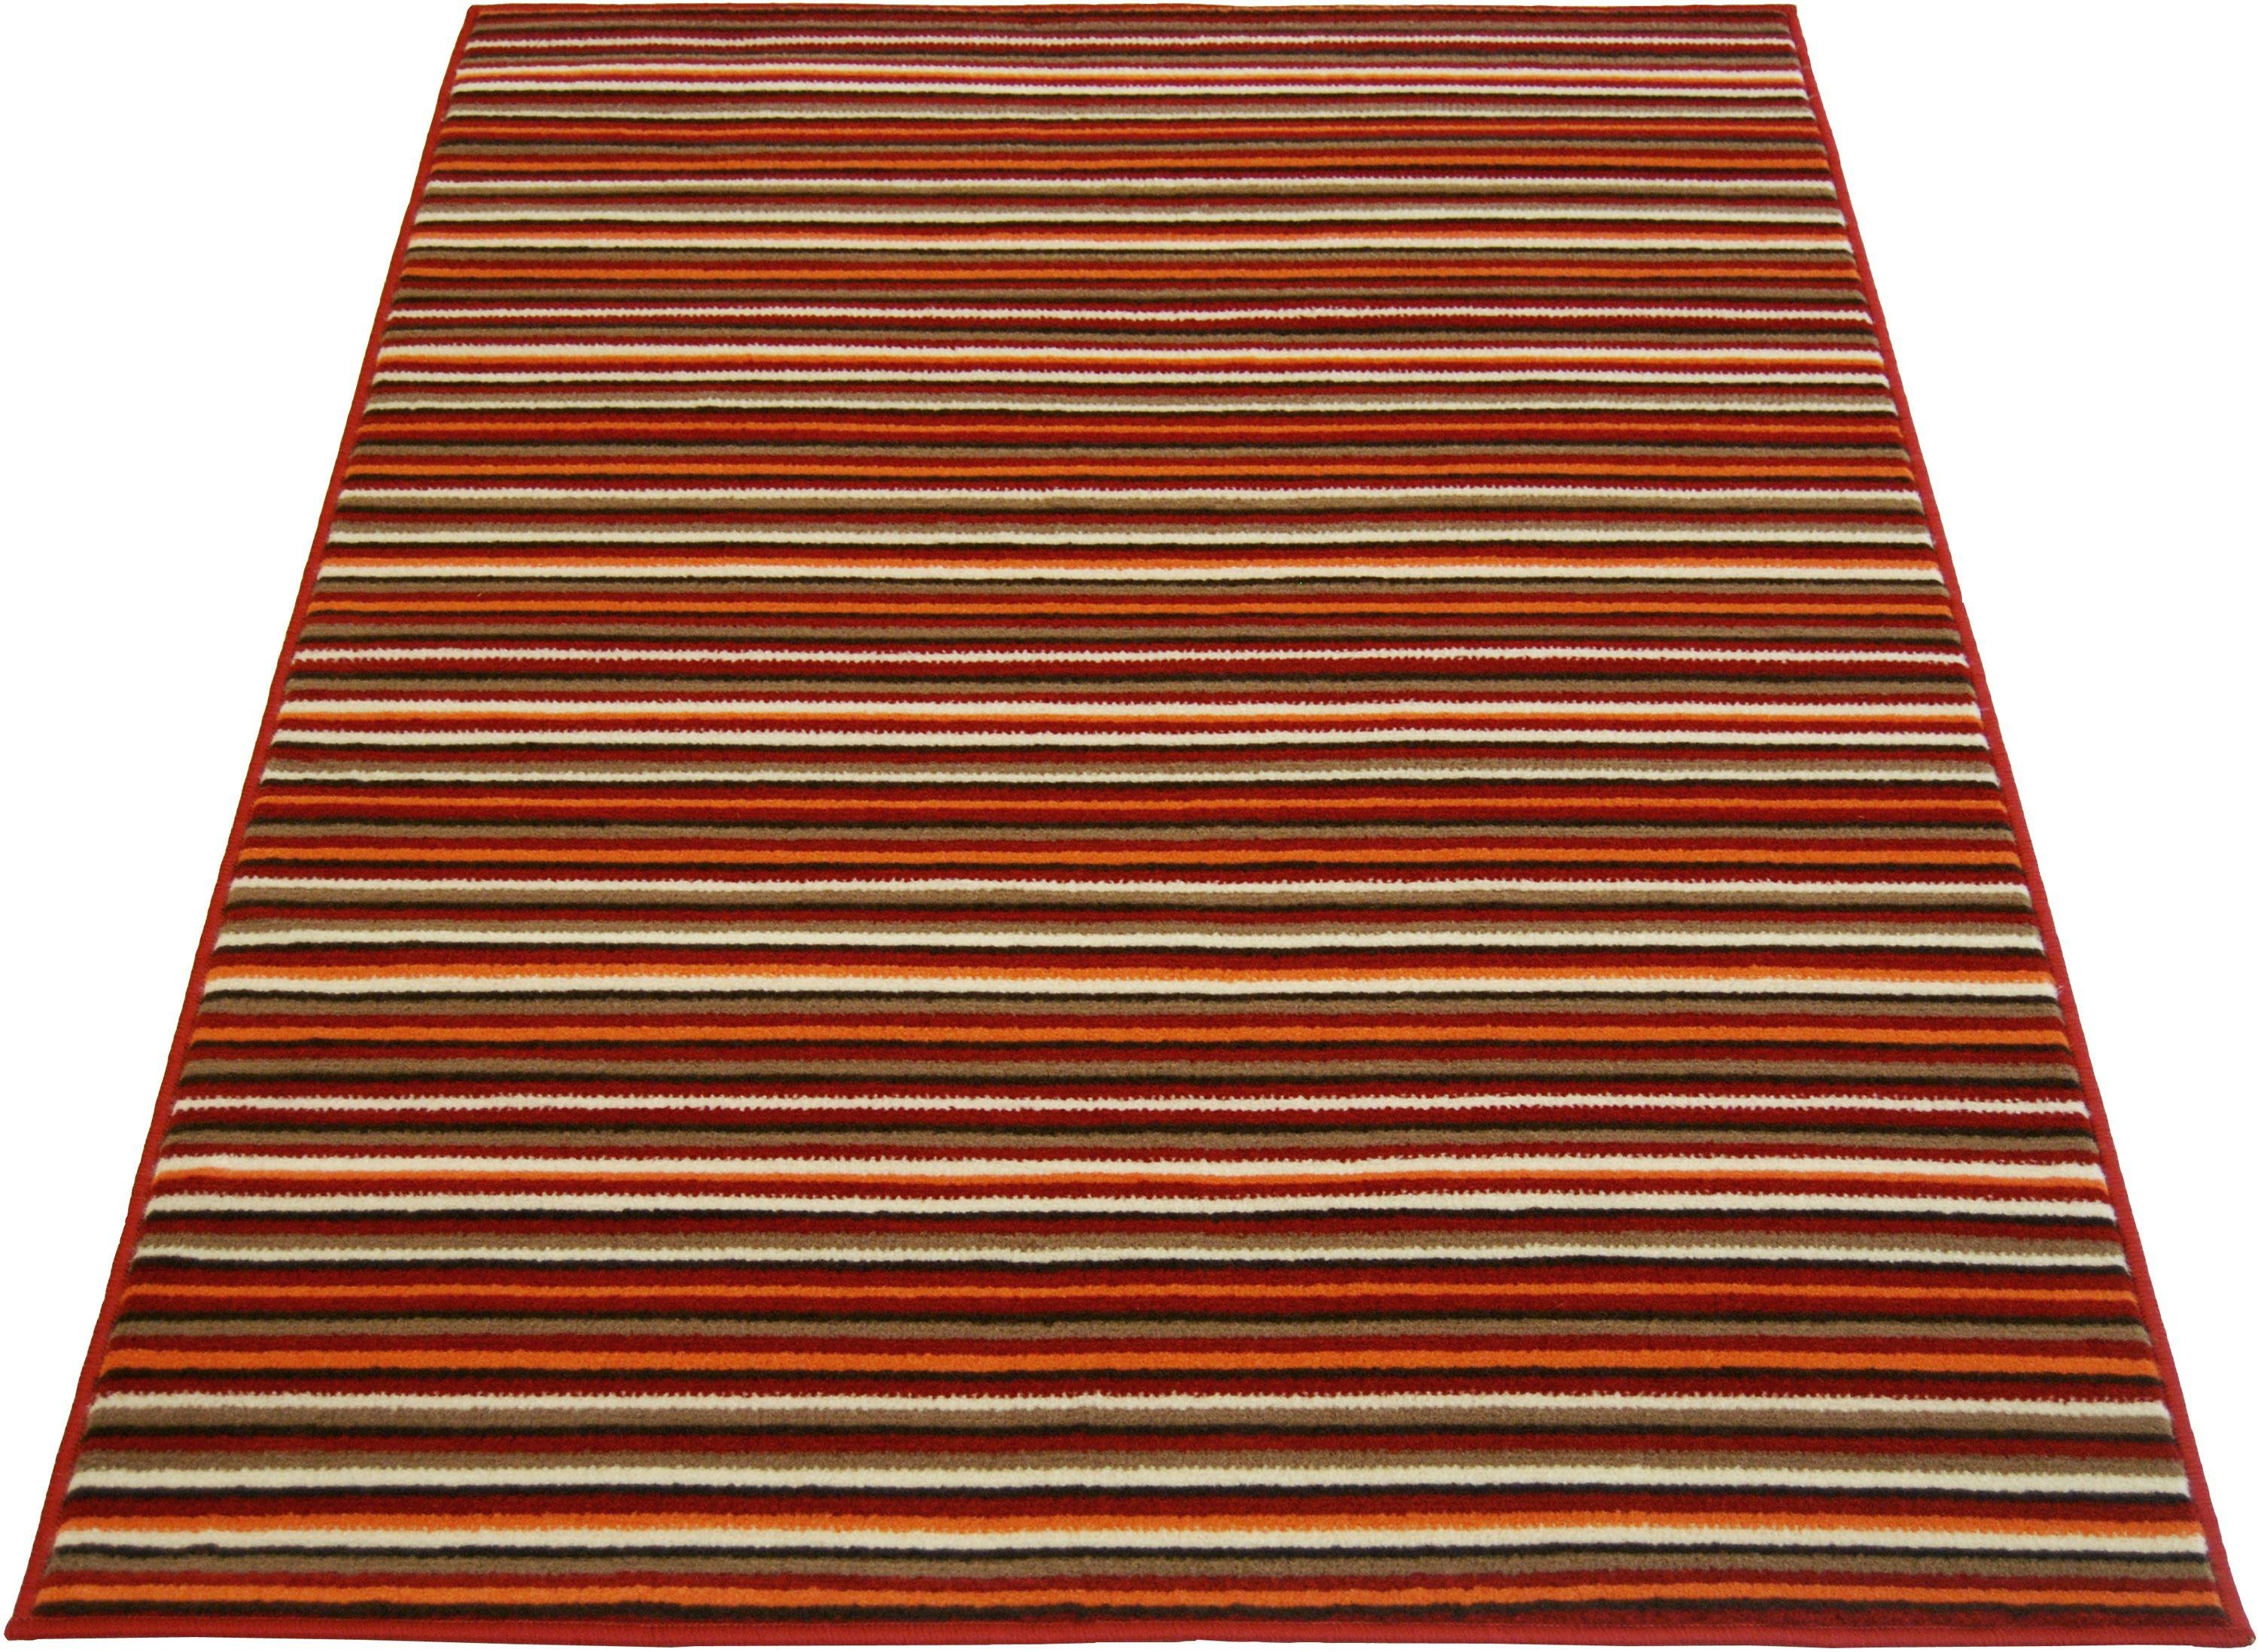 Maestro Fine Stripe Rug - 80x150cm - Red.